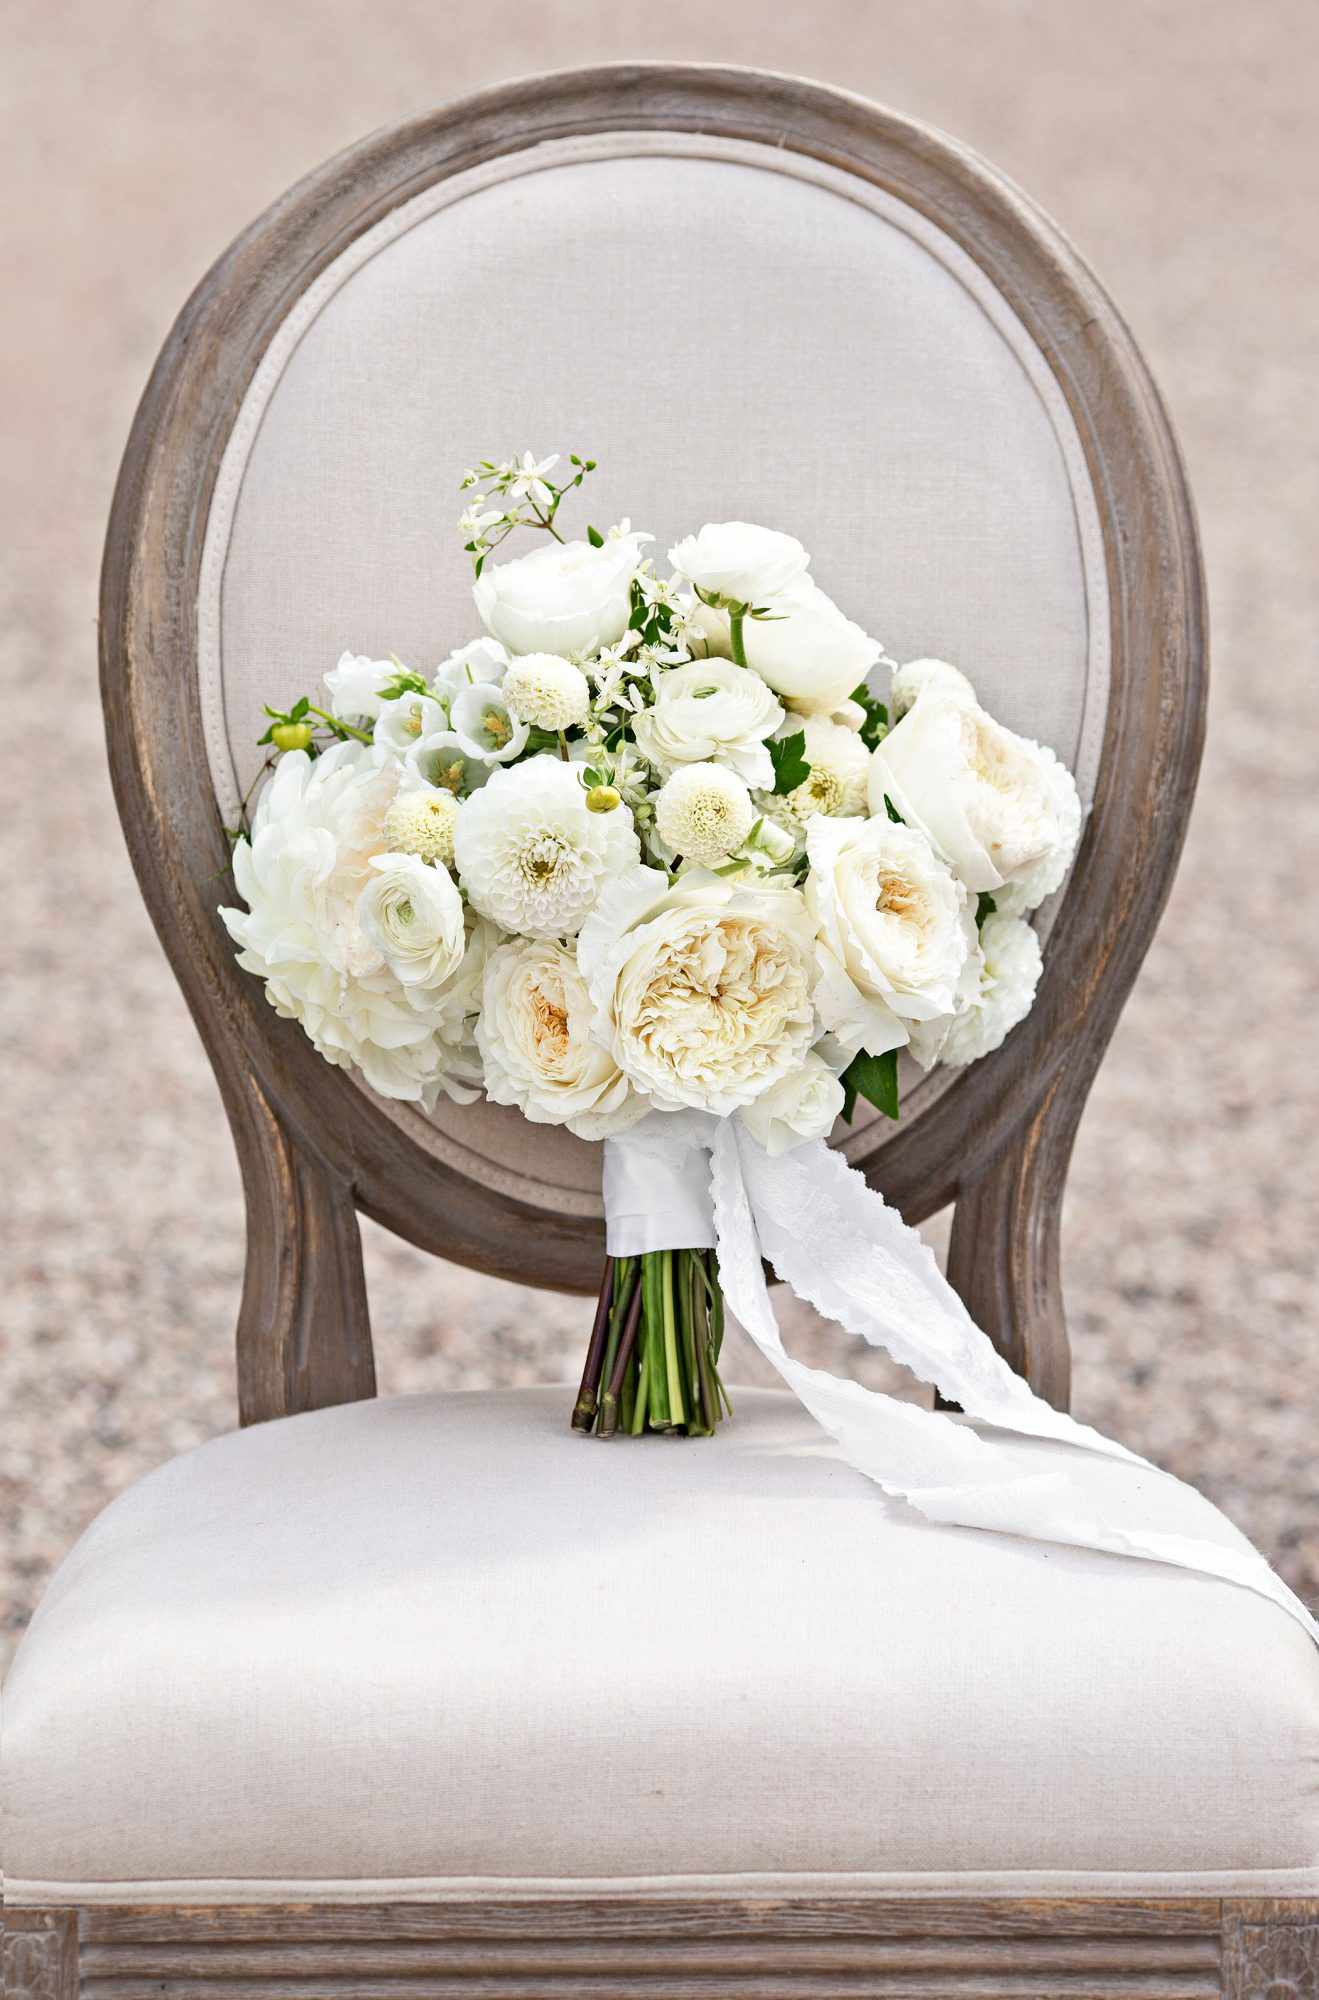 An All-White Bouquet